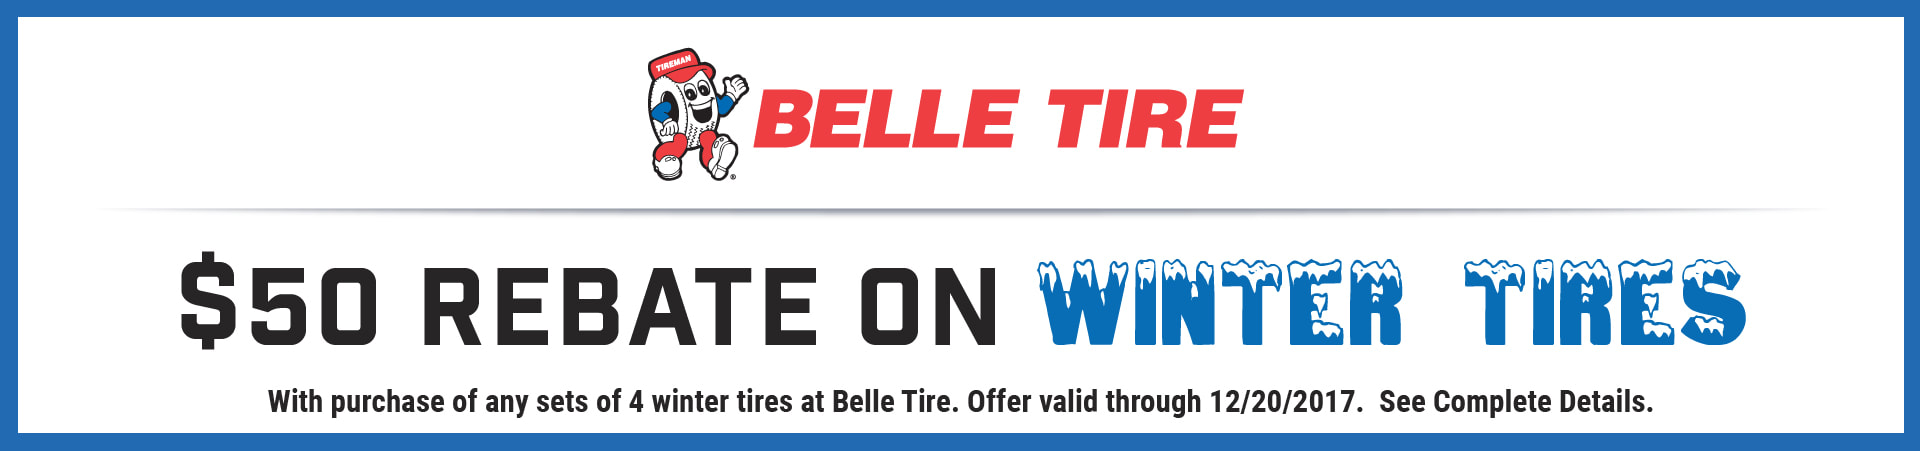 Belle Tire Winter Tire Rebate